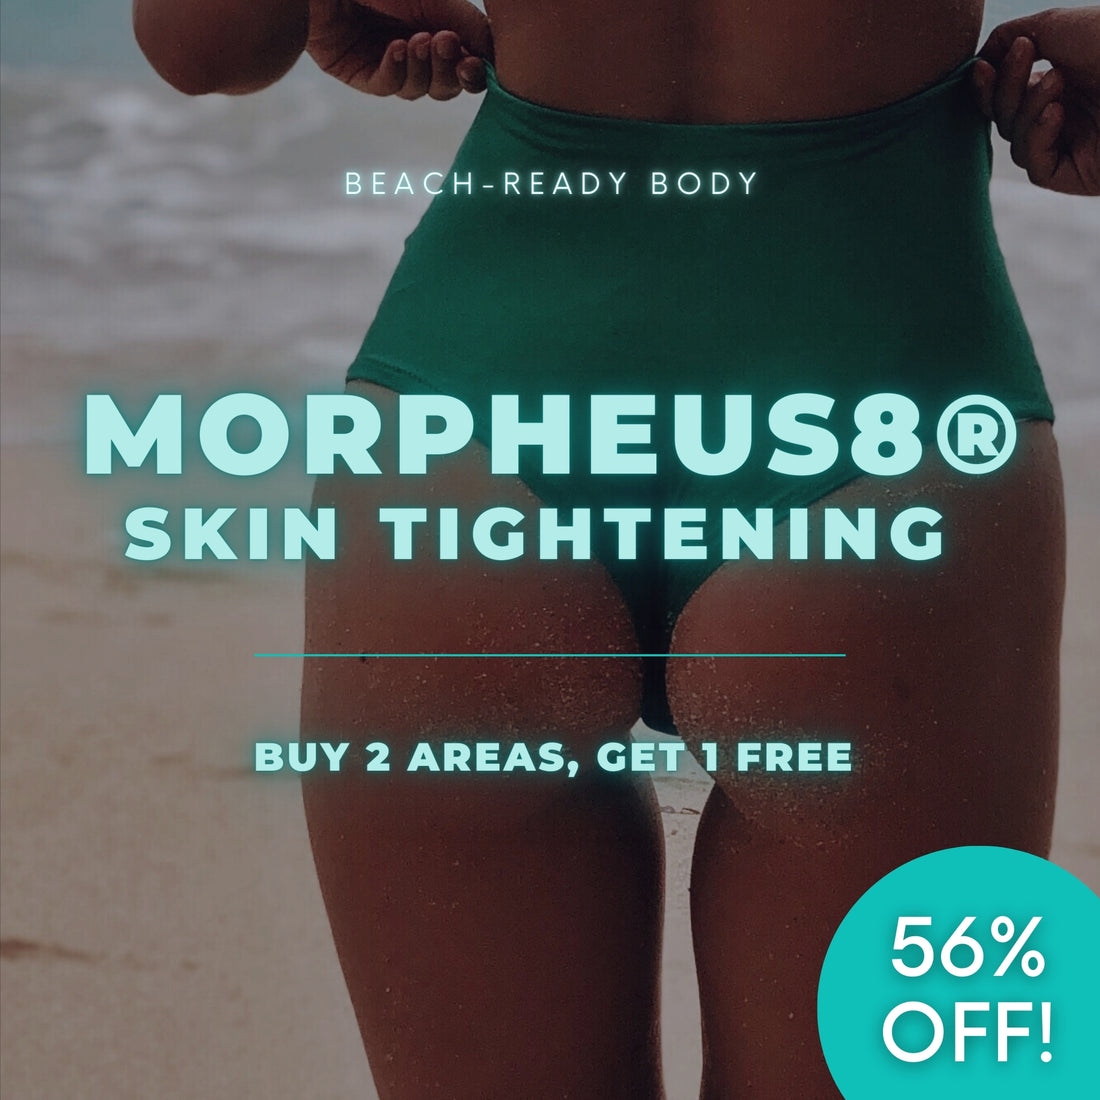 Morpheus8 Body Skin Tightening | Buy 2 Areas, Get 1 FREE